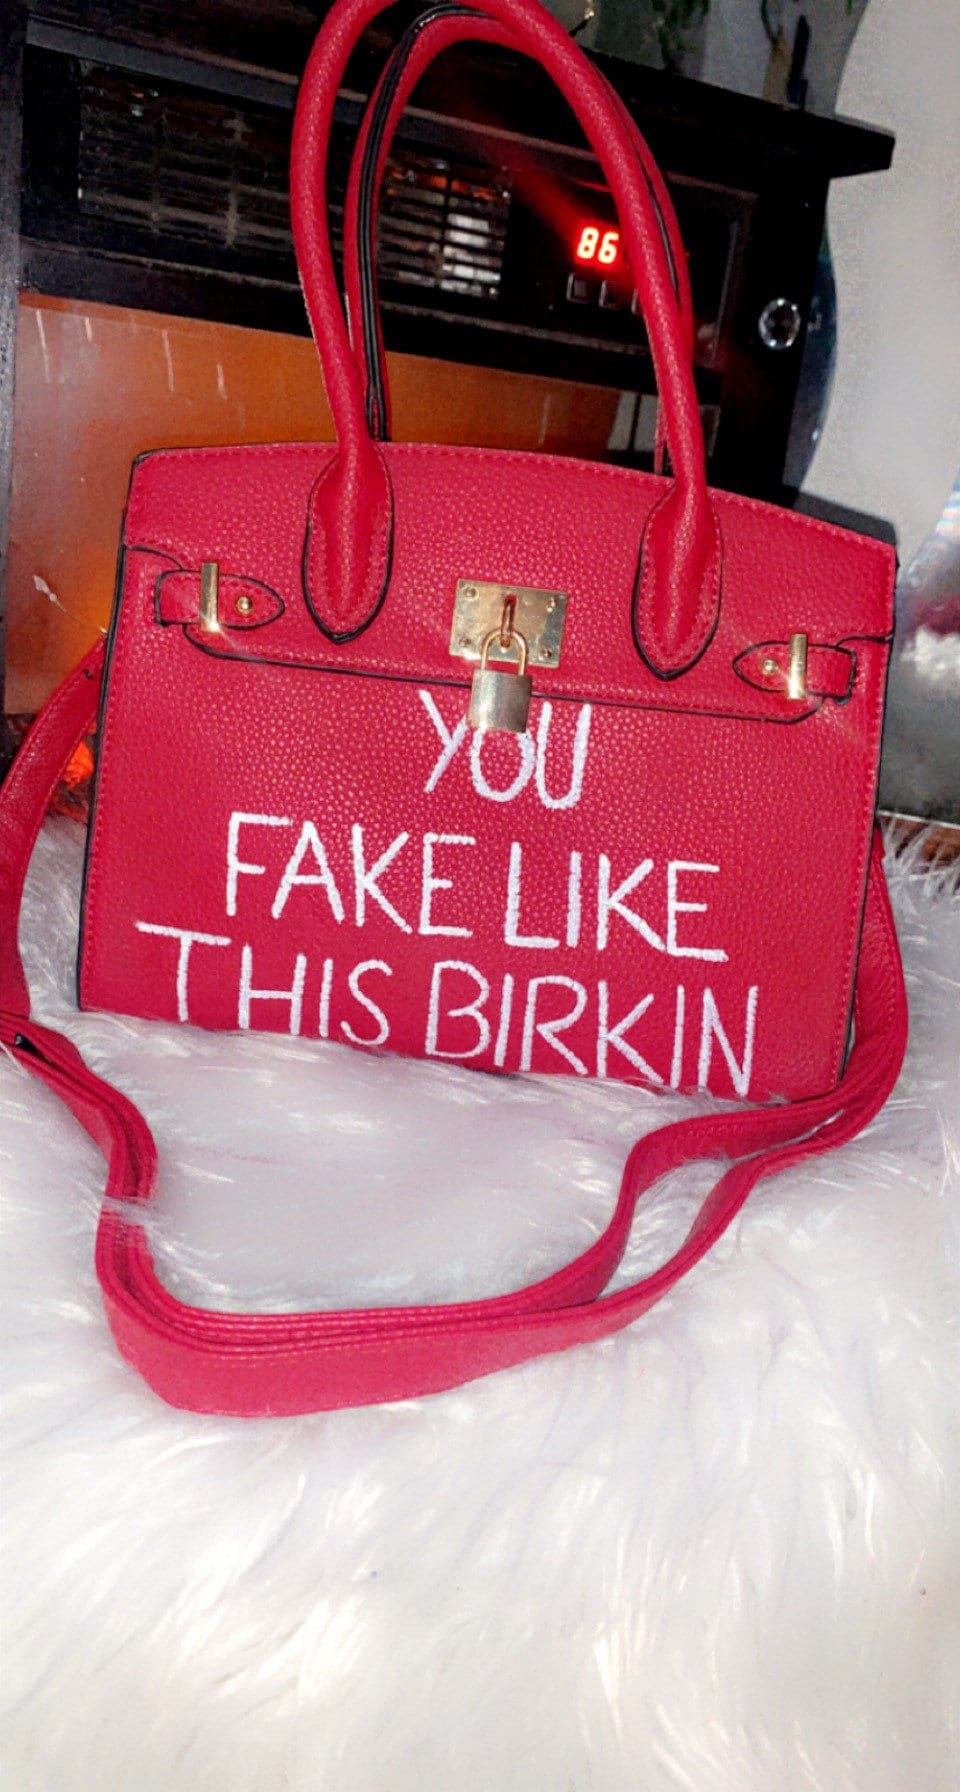 You Fake like this Birkin.